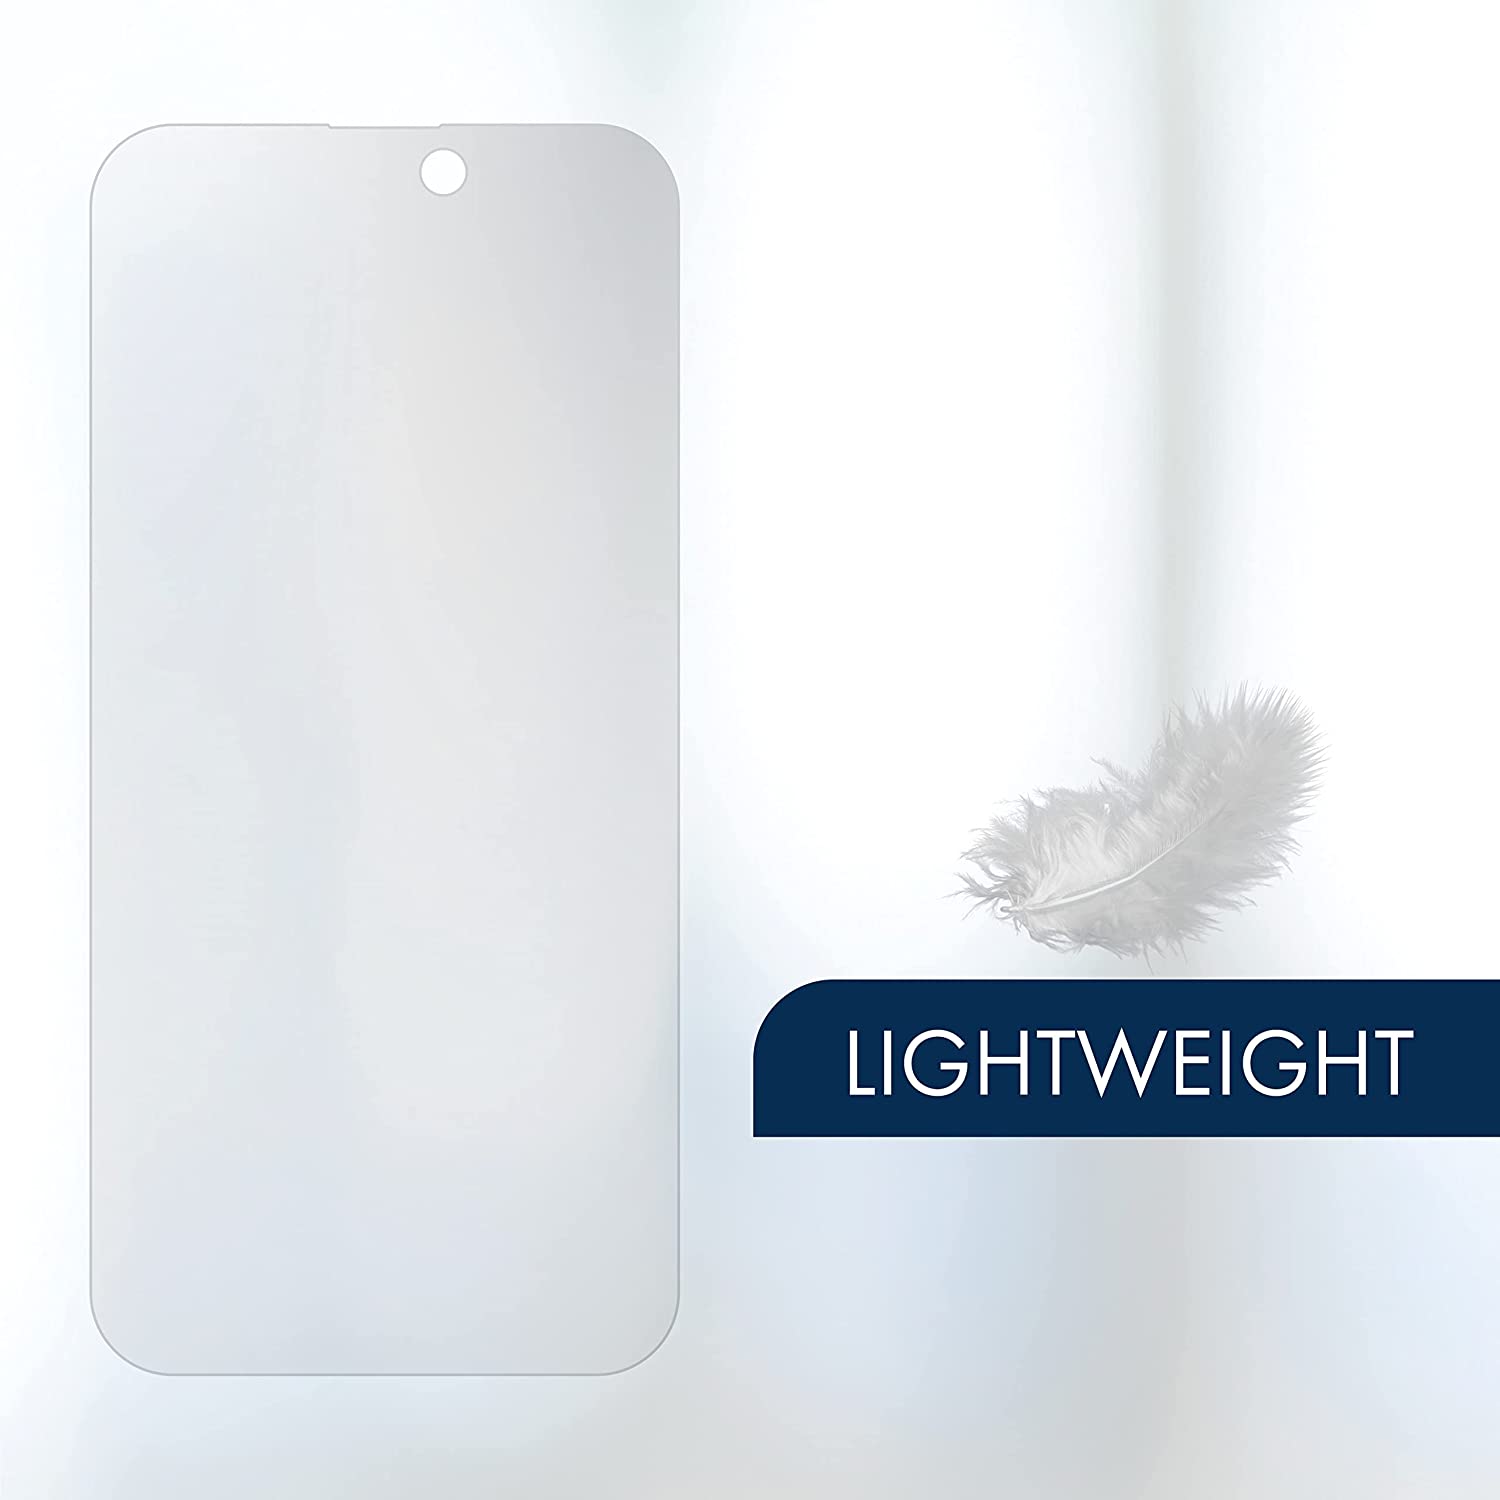 OnePlus 6T Screen Protector + Black Carbon Fiber Skin